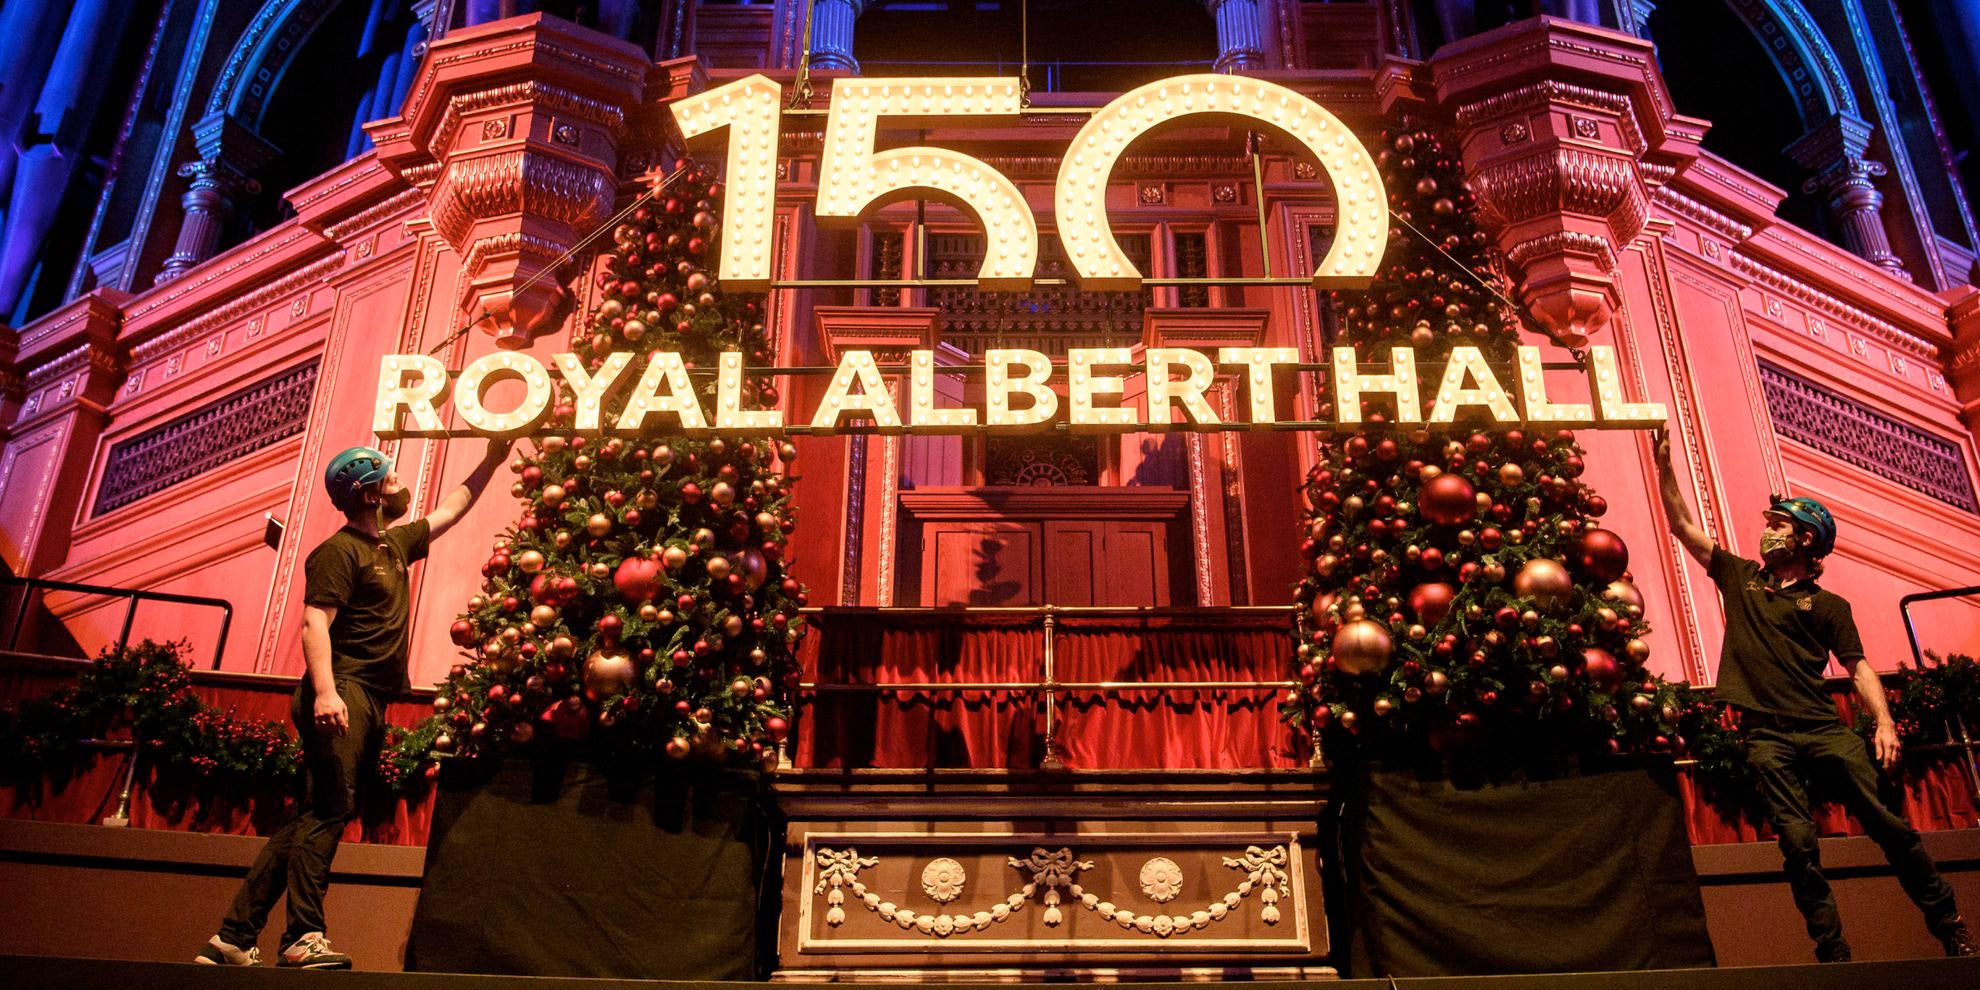 Royal Albert Hall Anniversary Sign